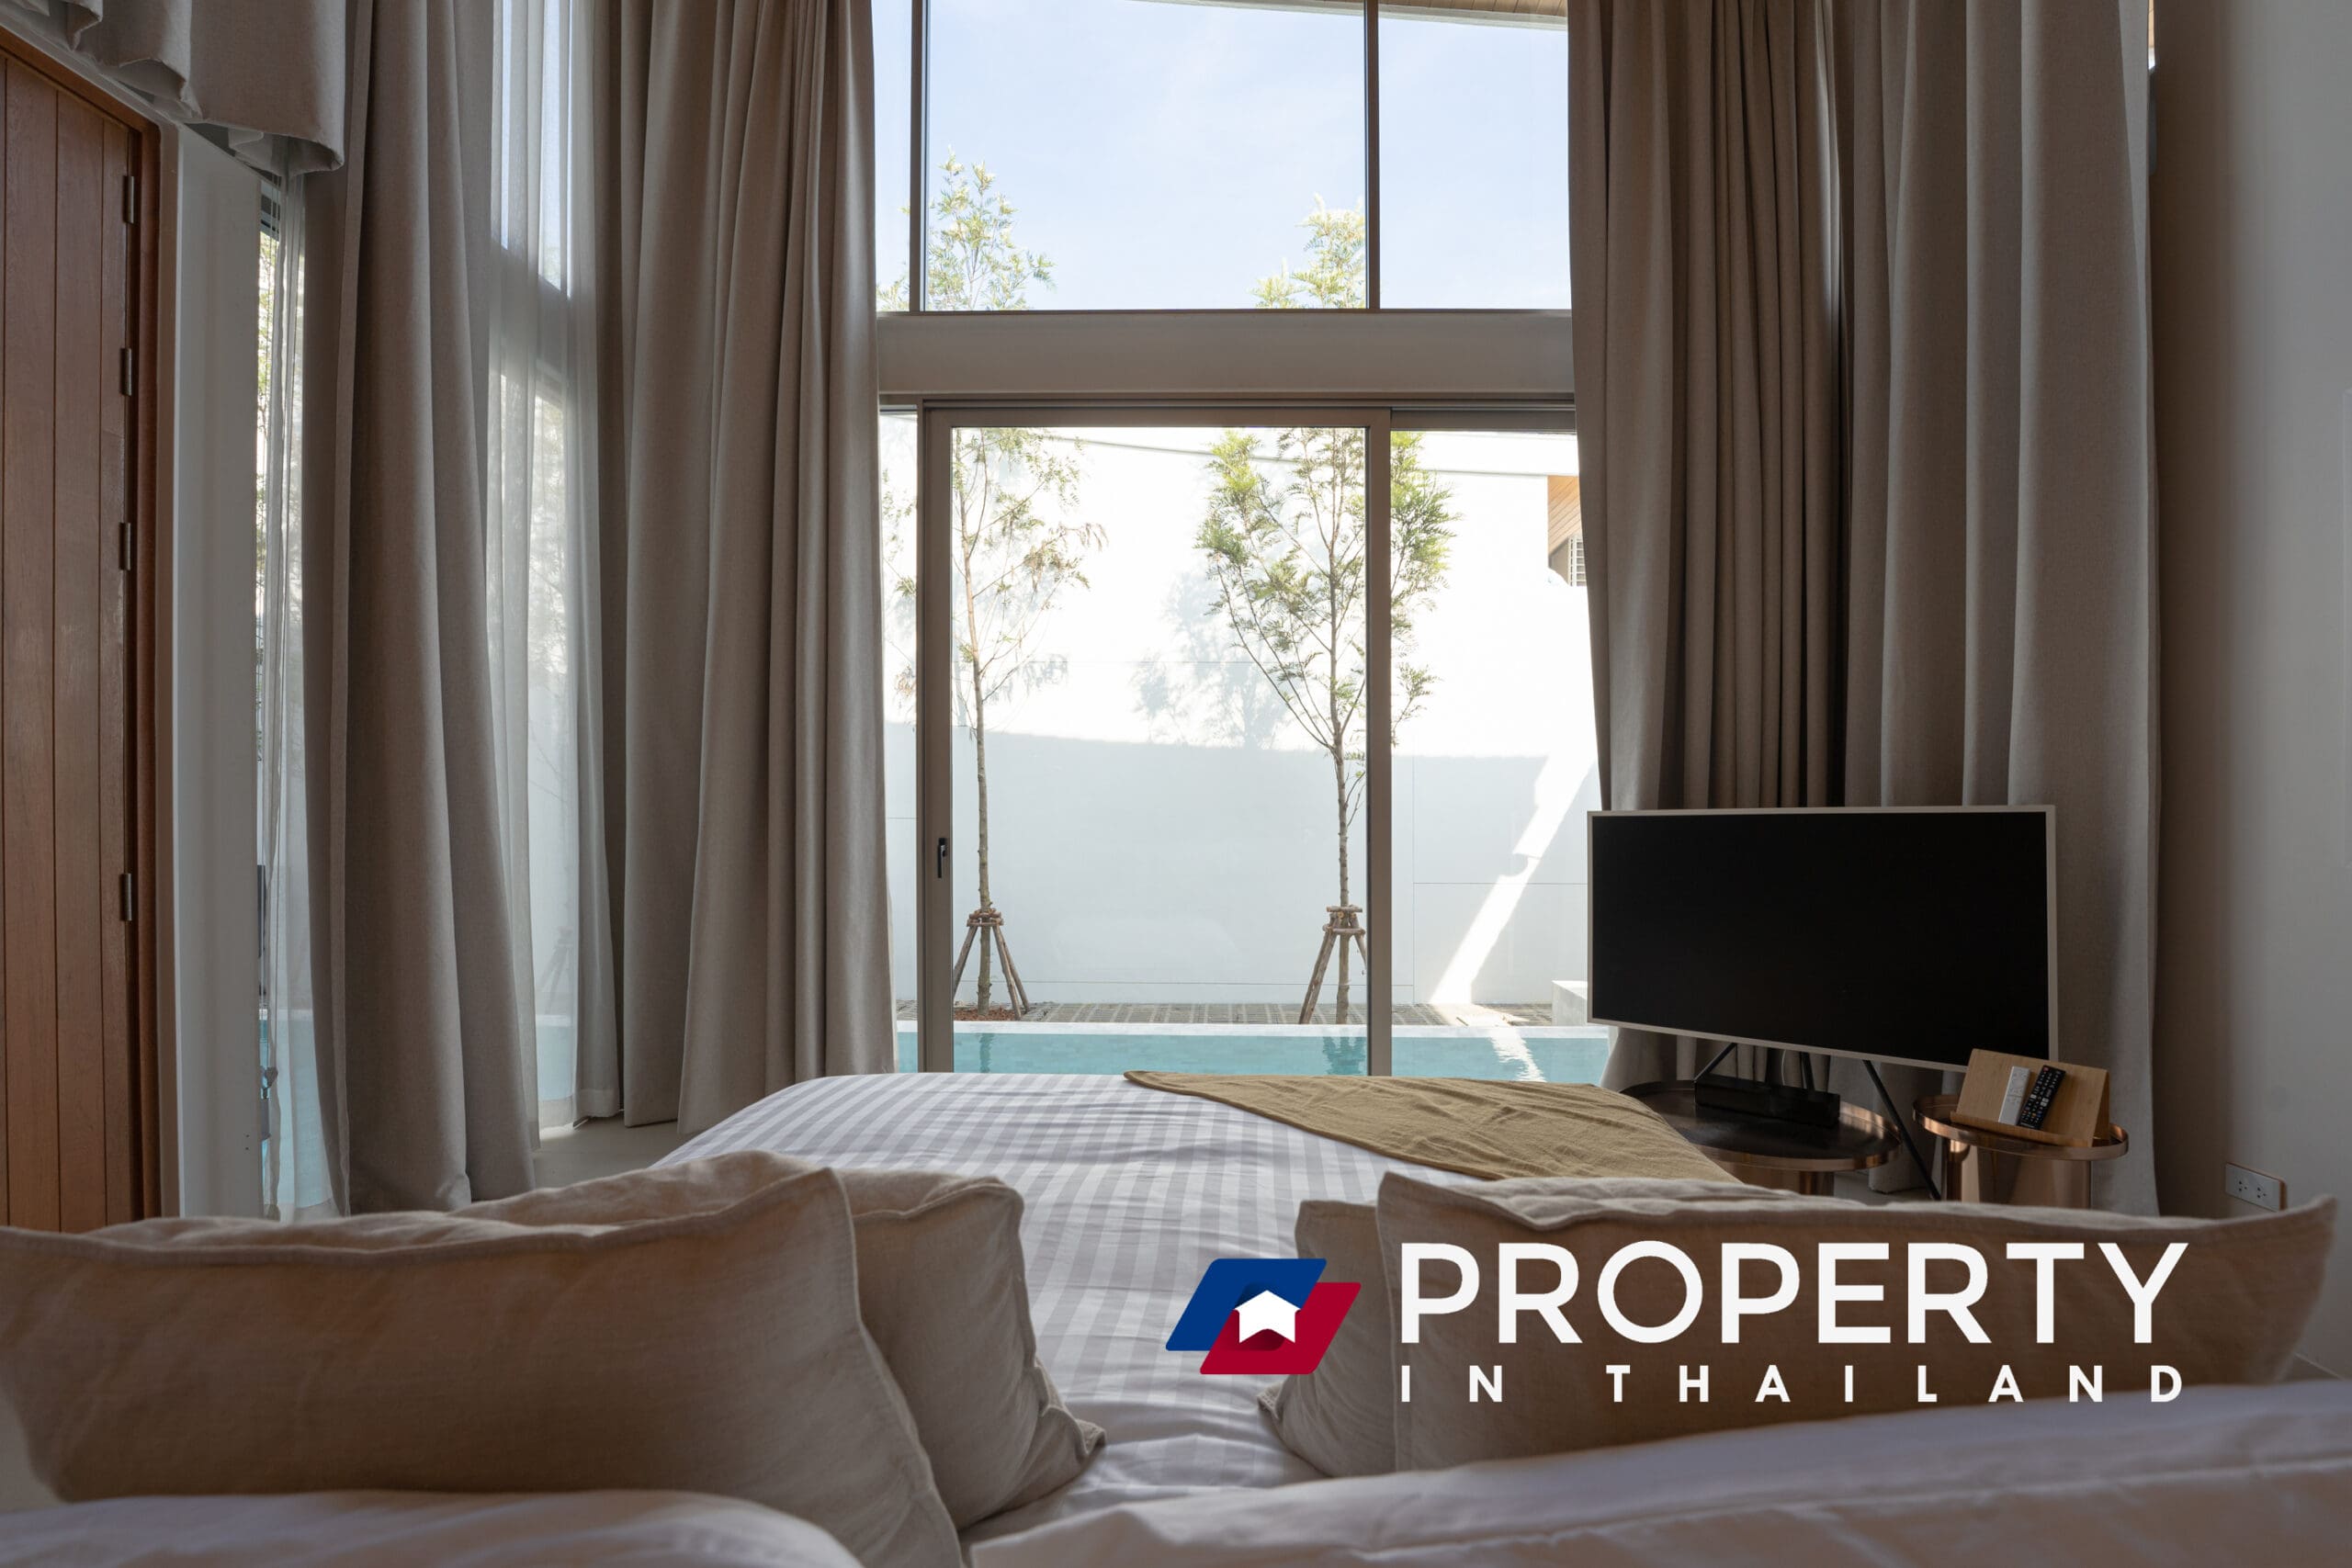 Real Estate in thailand, Phuket for sale (Bedroom)